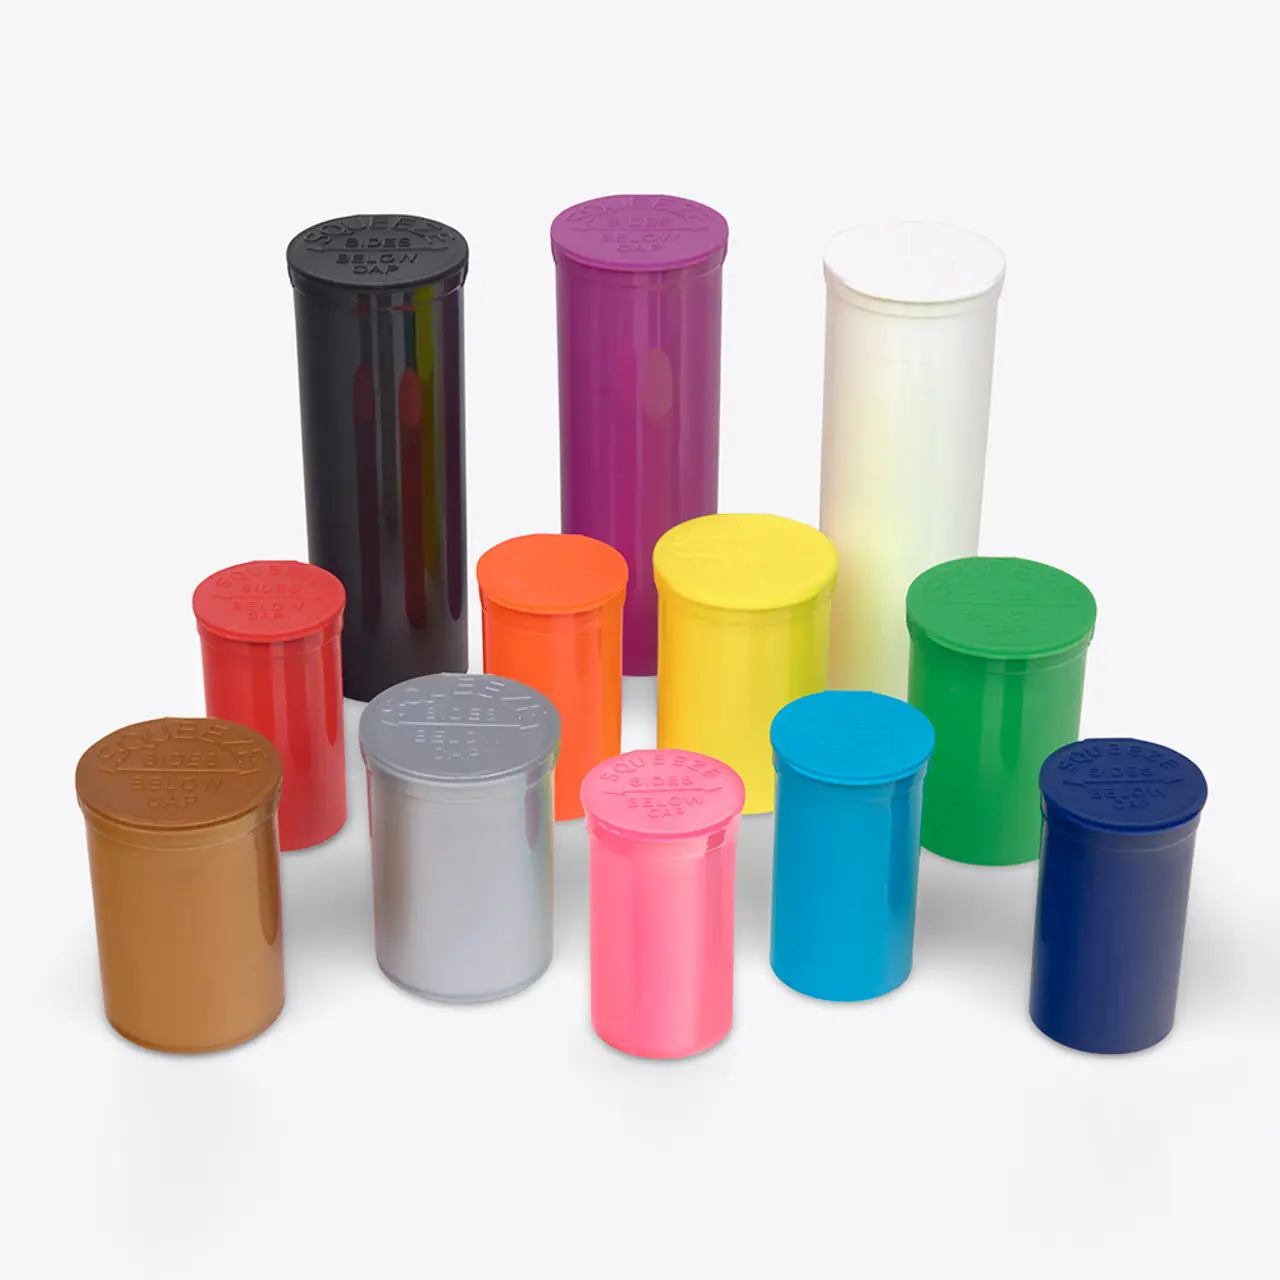 13 19 30 60 Dram Pop Top Kindveilige Doppen Knijpflessen Buiscontainers Verpakking Luchtdichte Pillenfles Plastic